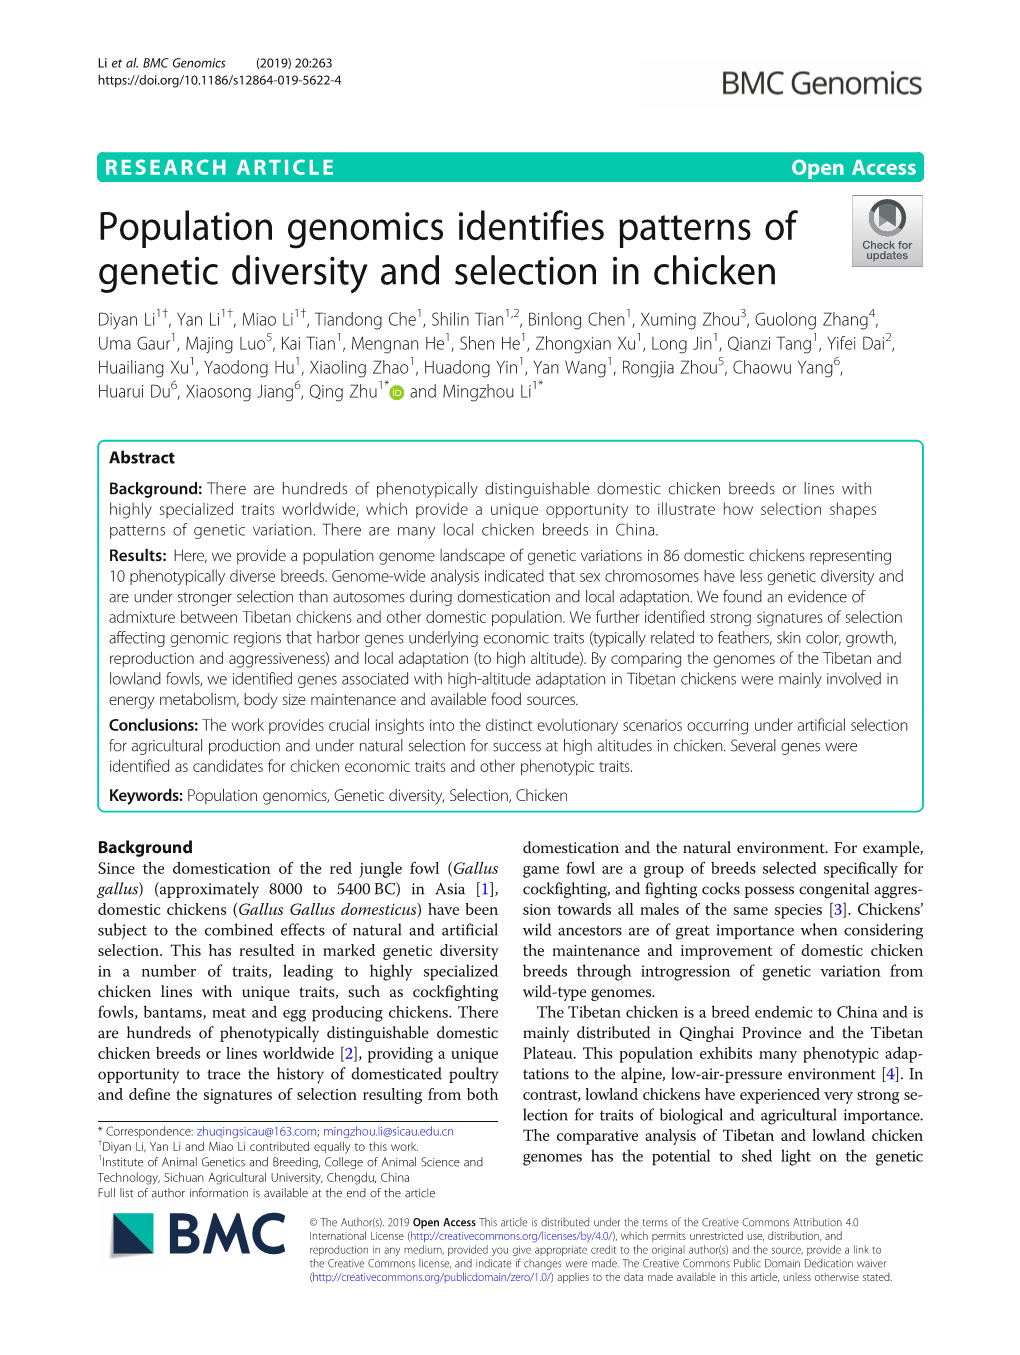 Population Genomics Identifies Patterns of Genetic Diversity And